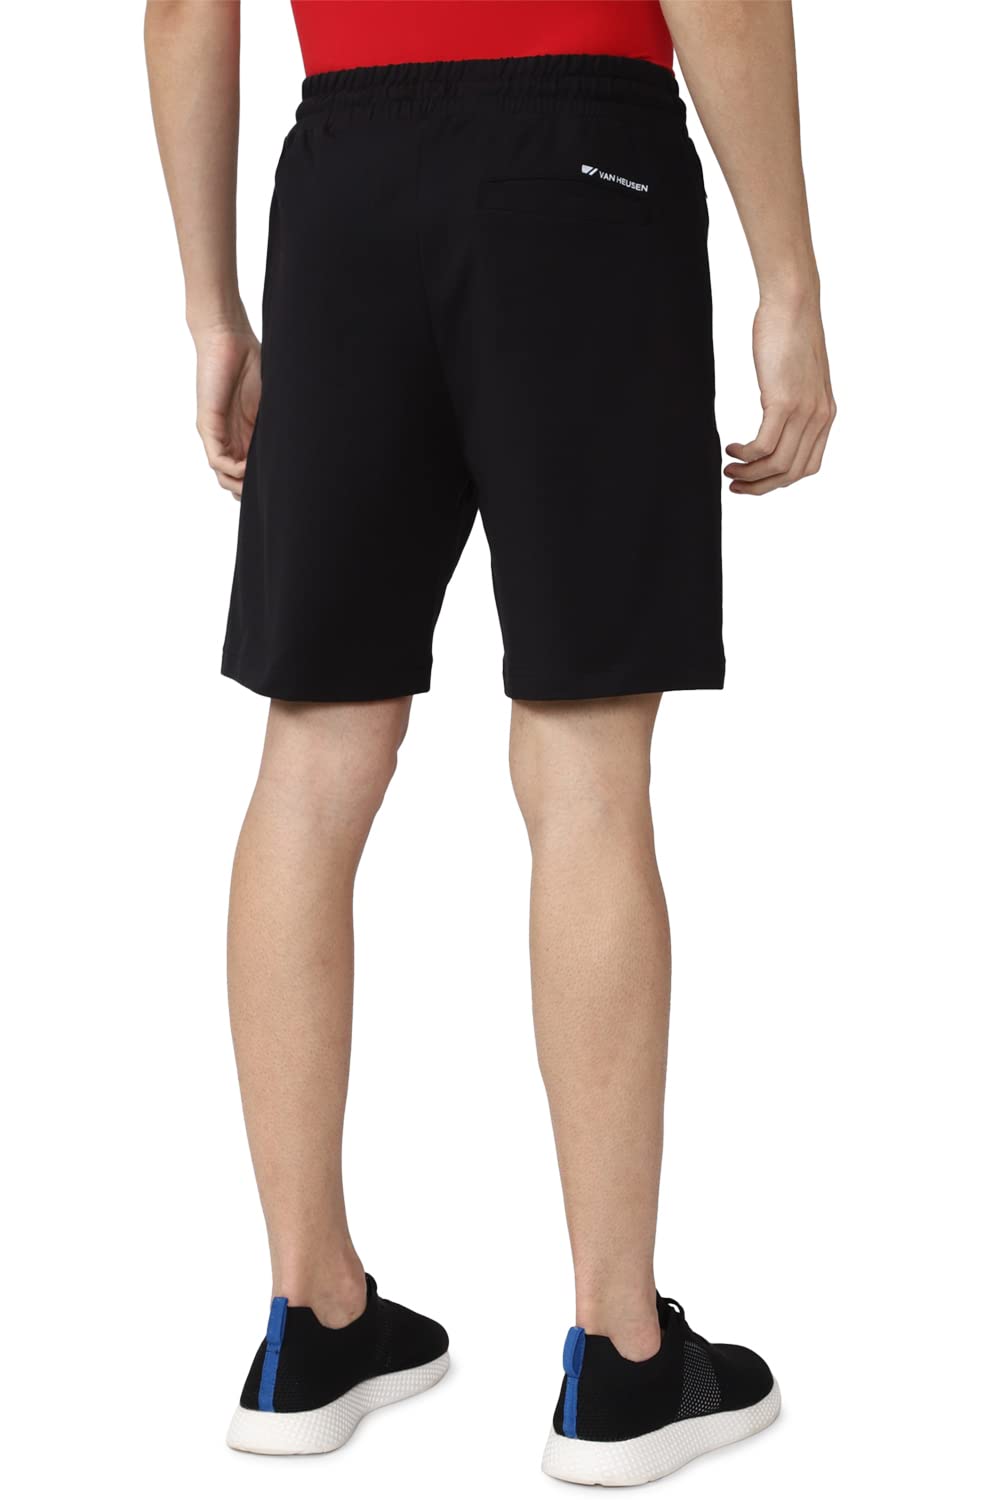 Van Heusen Men's Bermuda Shorts (VFLOAATFU90003_Black_M)